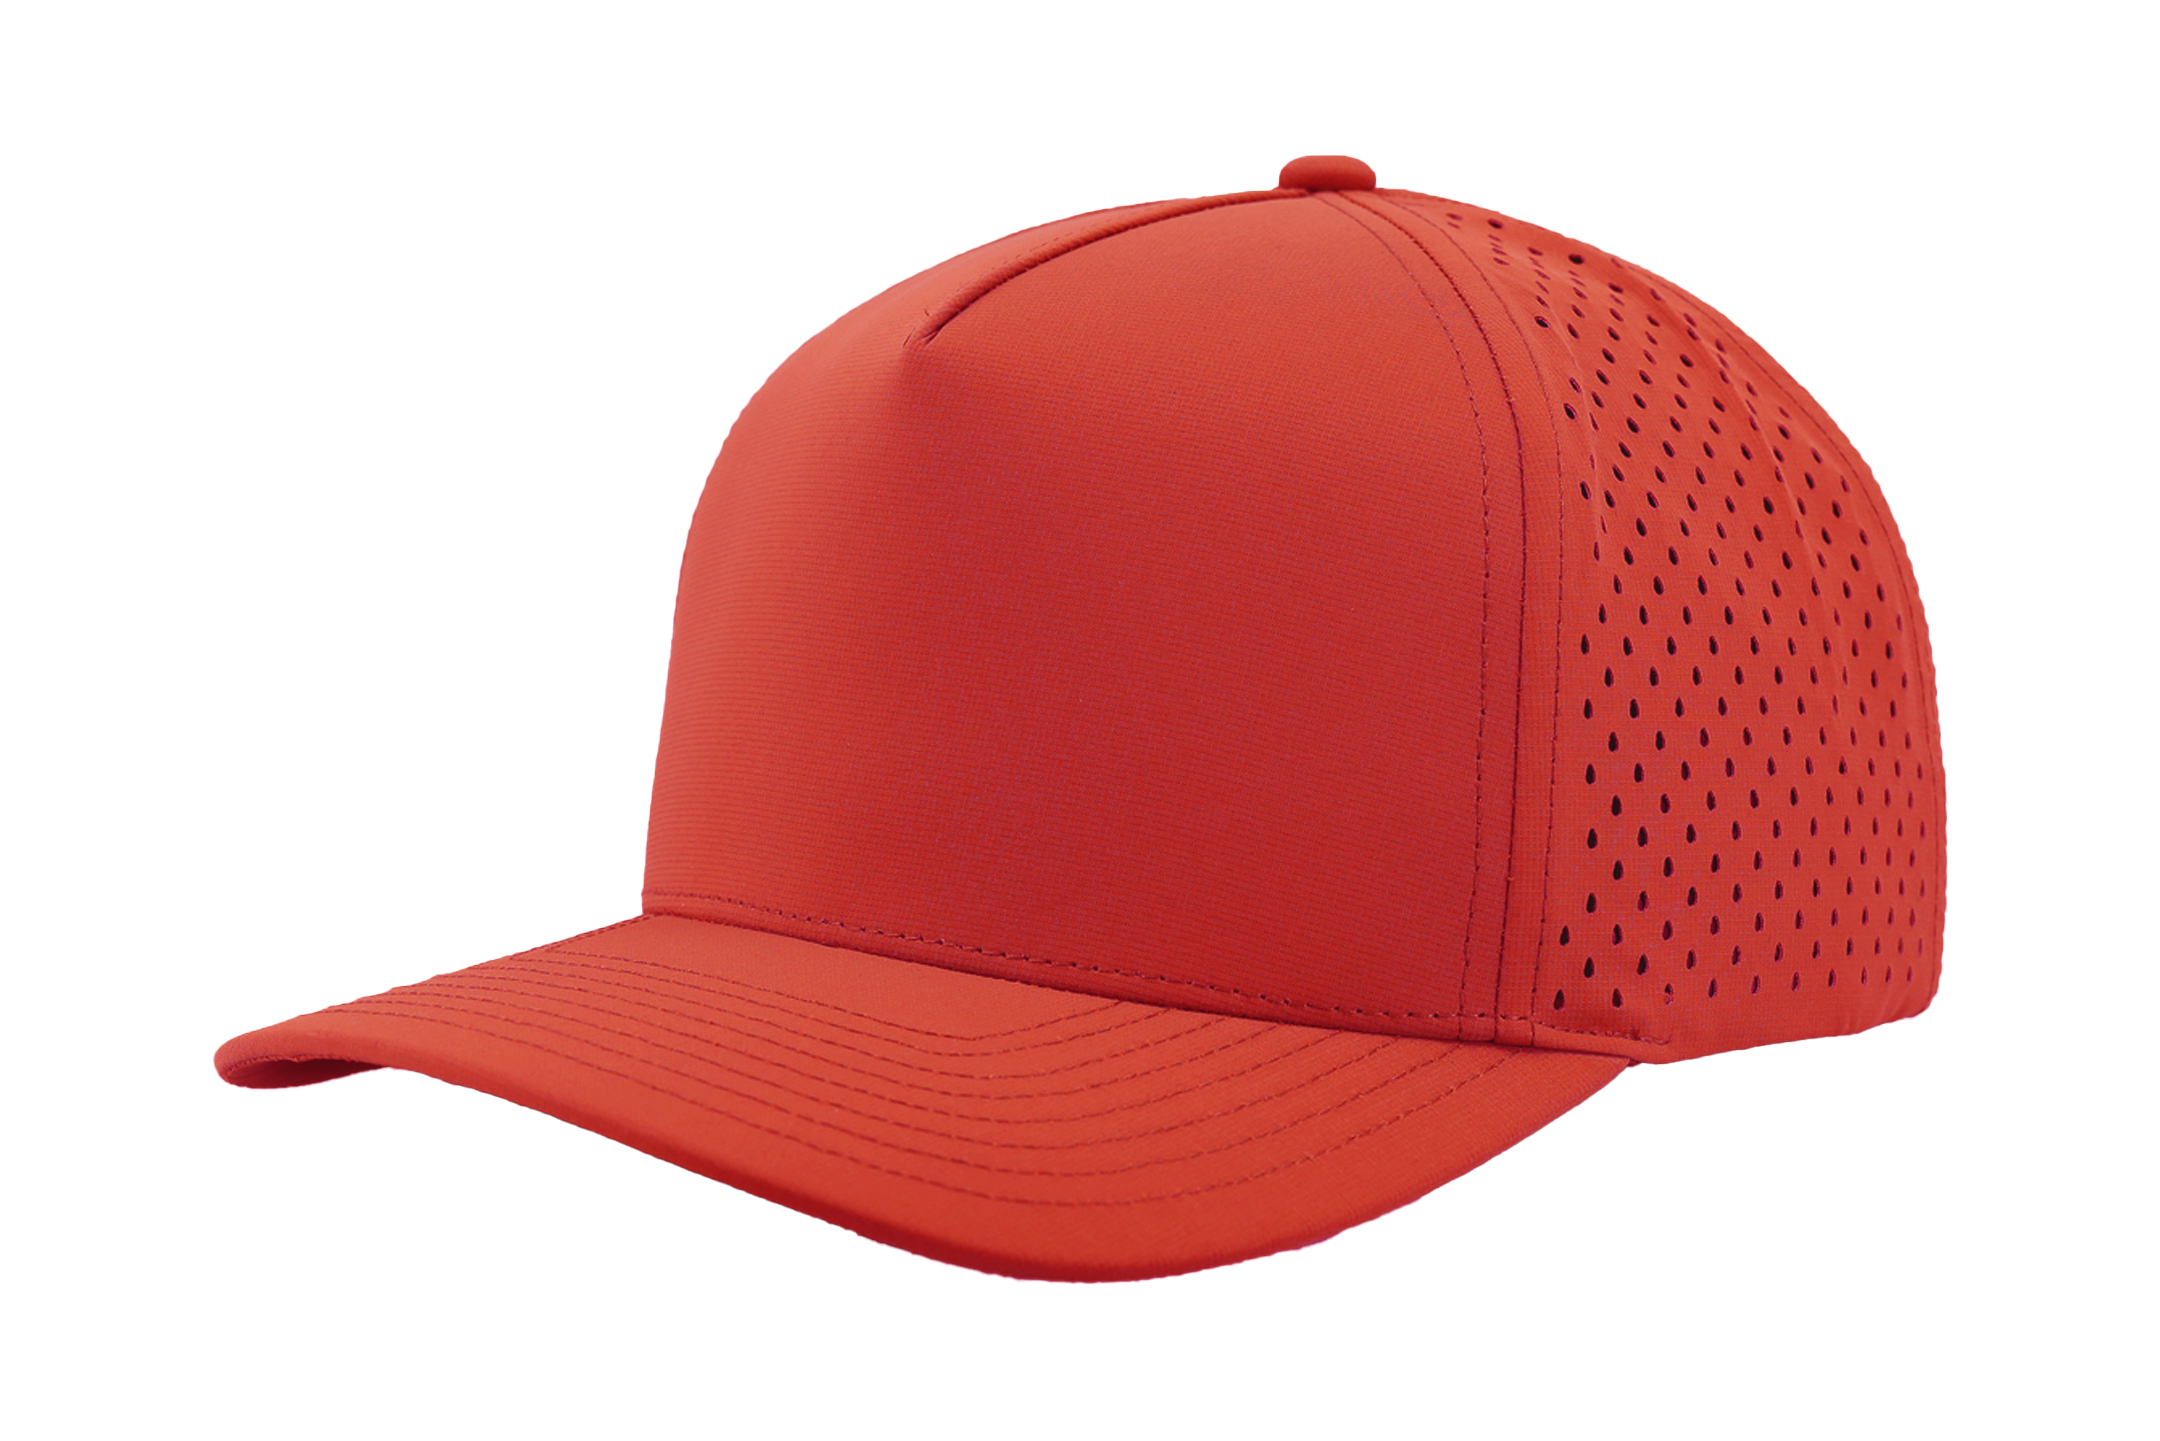 Blackhawk hat panel custom | | hat Repellent | 5 Zapped Water Premium Headwear